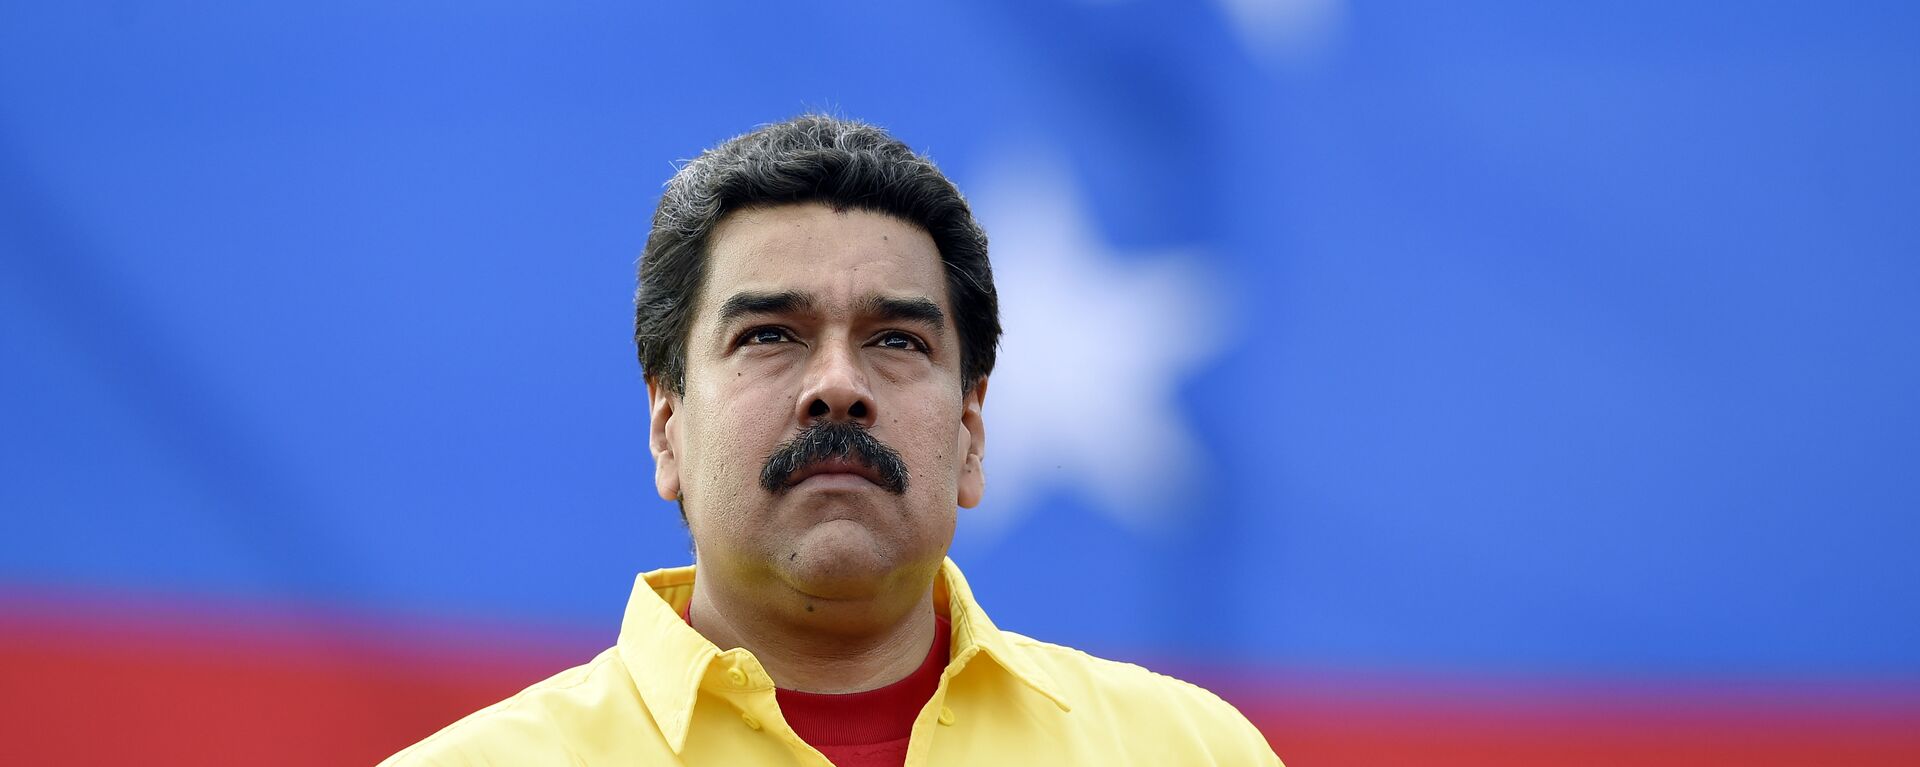 Venezuelan President Nicolas Maduro - Sputnik Mundo, 1920, 04.04.2021